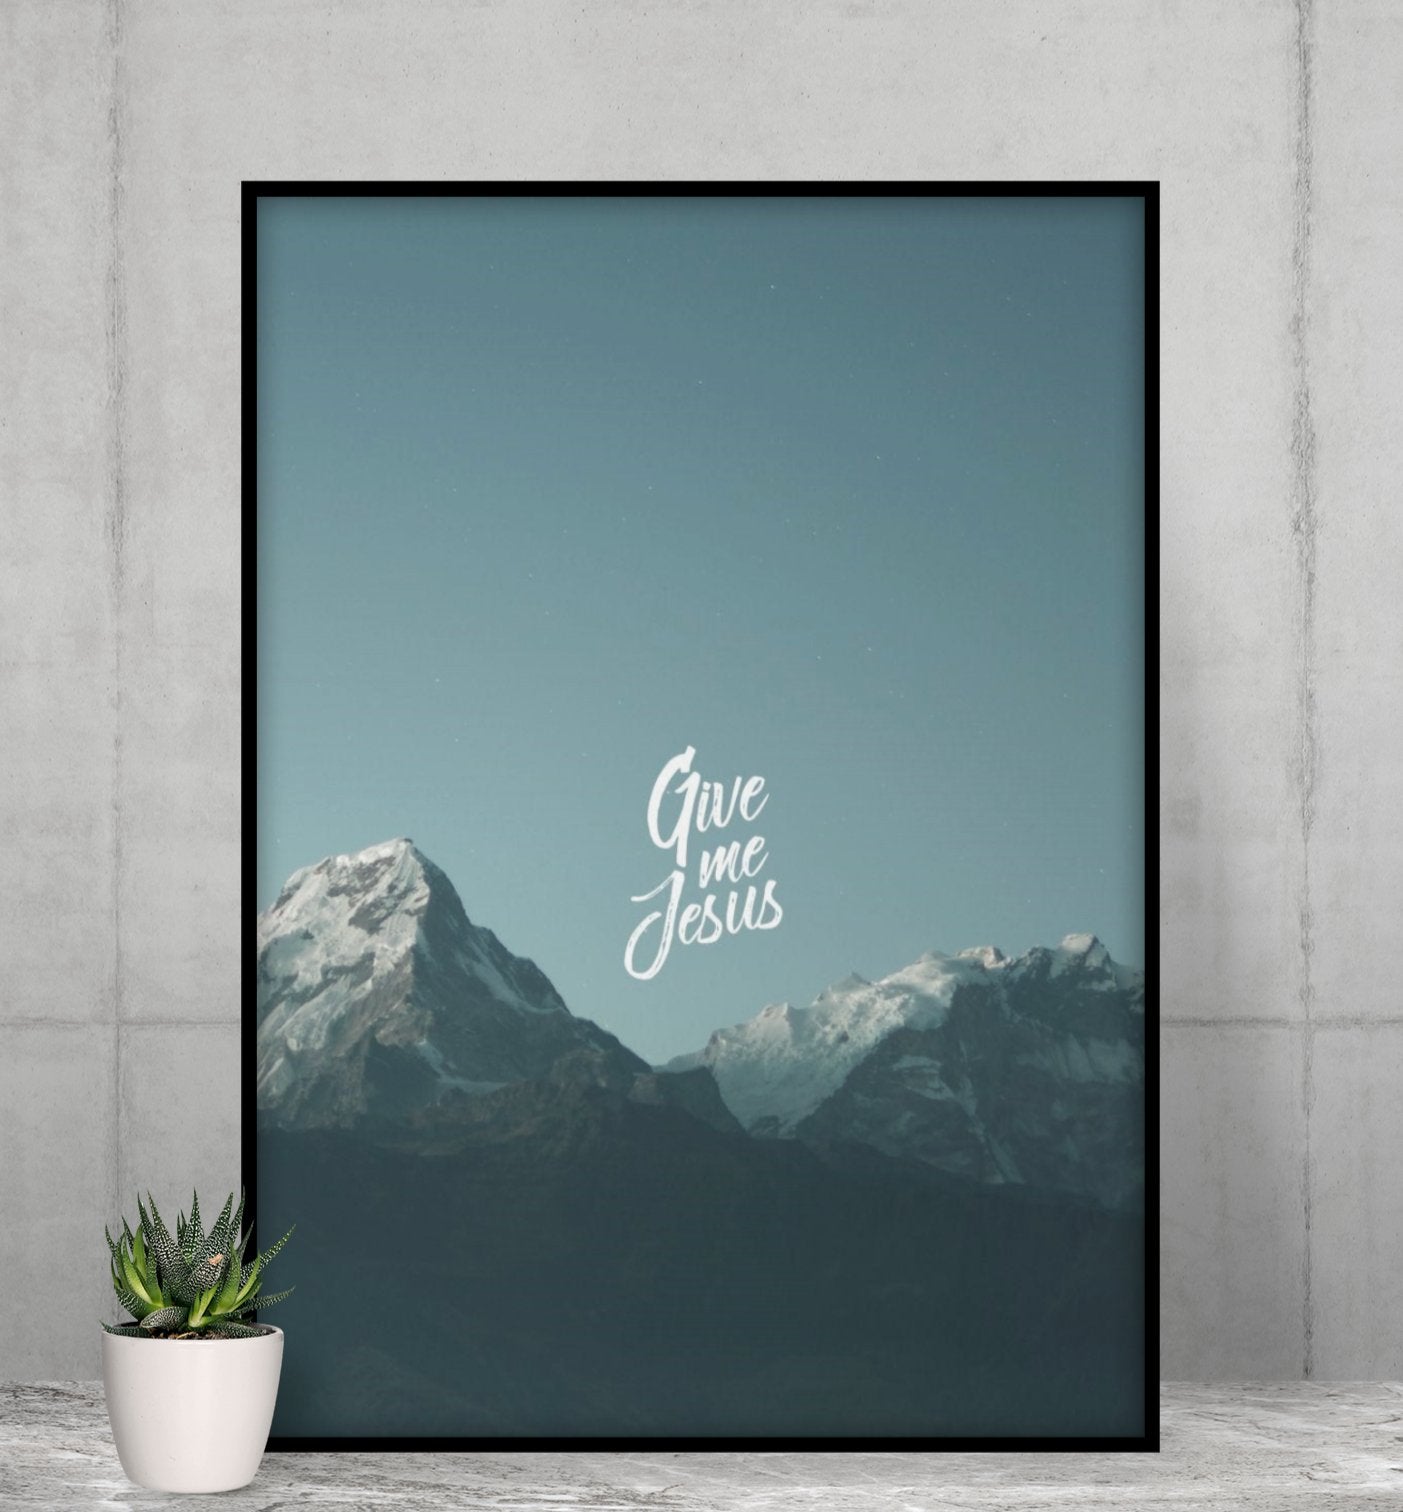 Give me Jesus Poster - Make-Hope